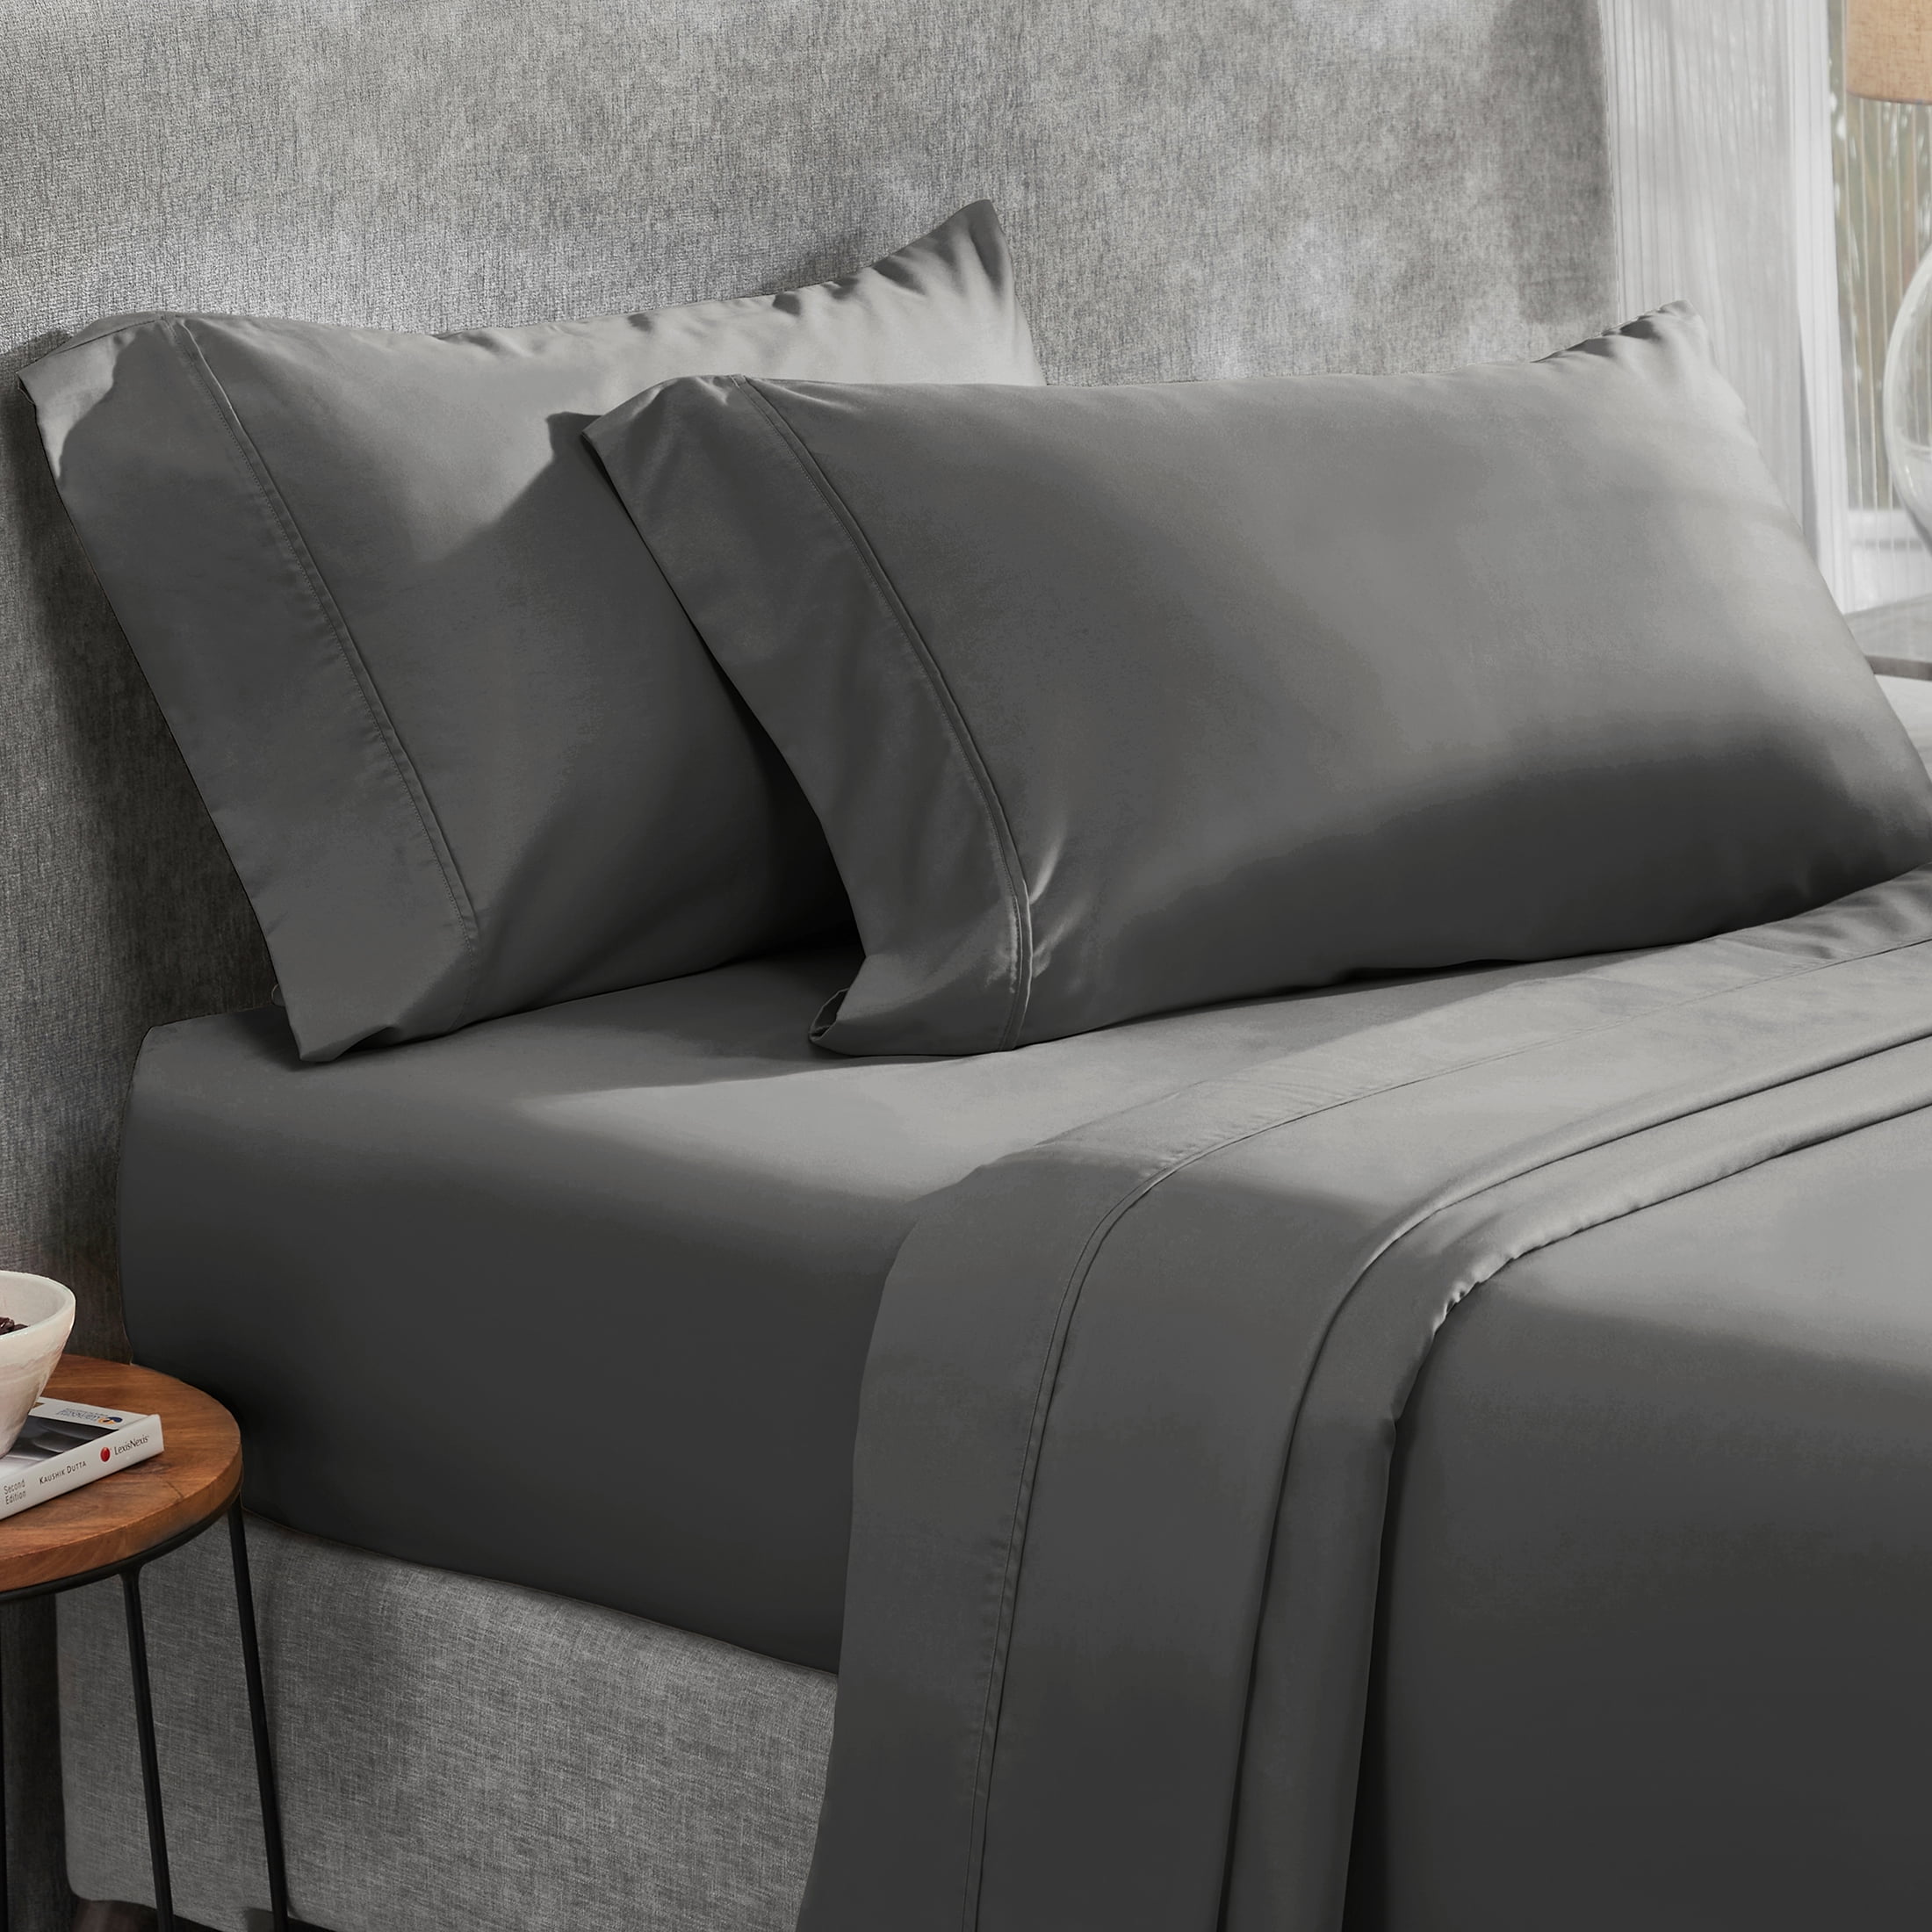 Details about   Microfiber 4 Piece Full Bed Sheet Set Dark Grey 